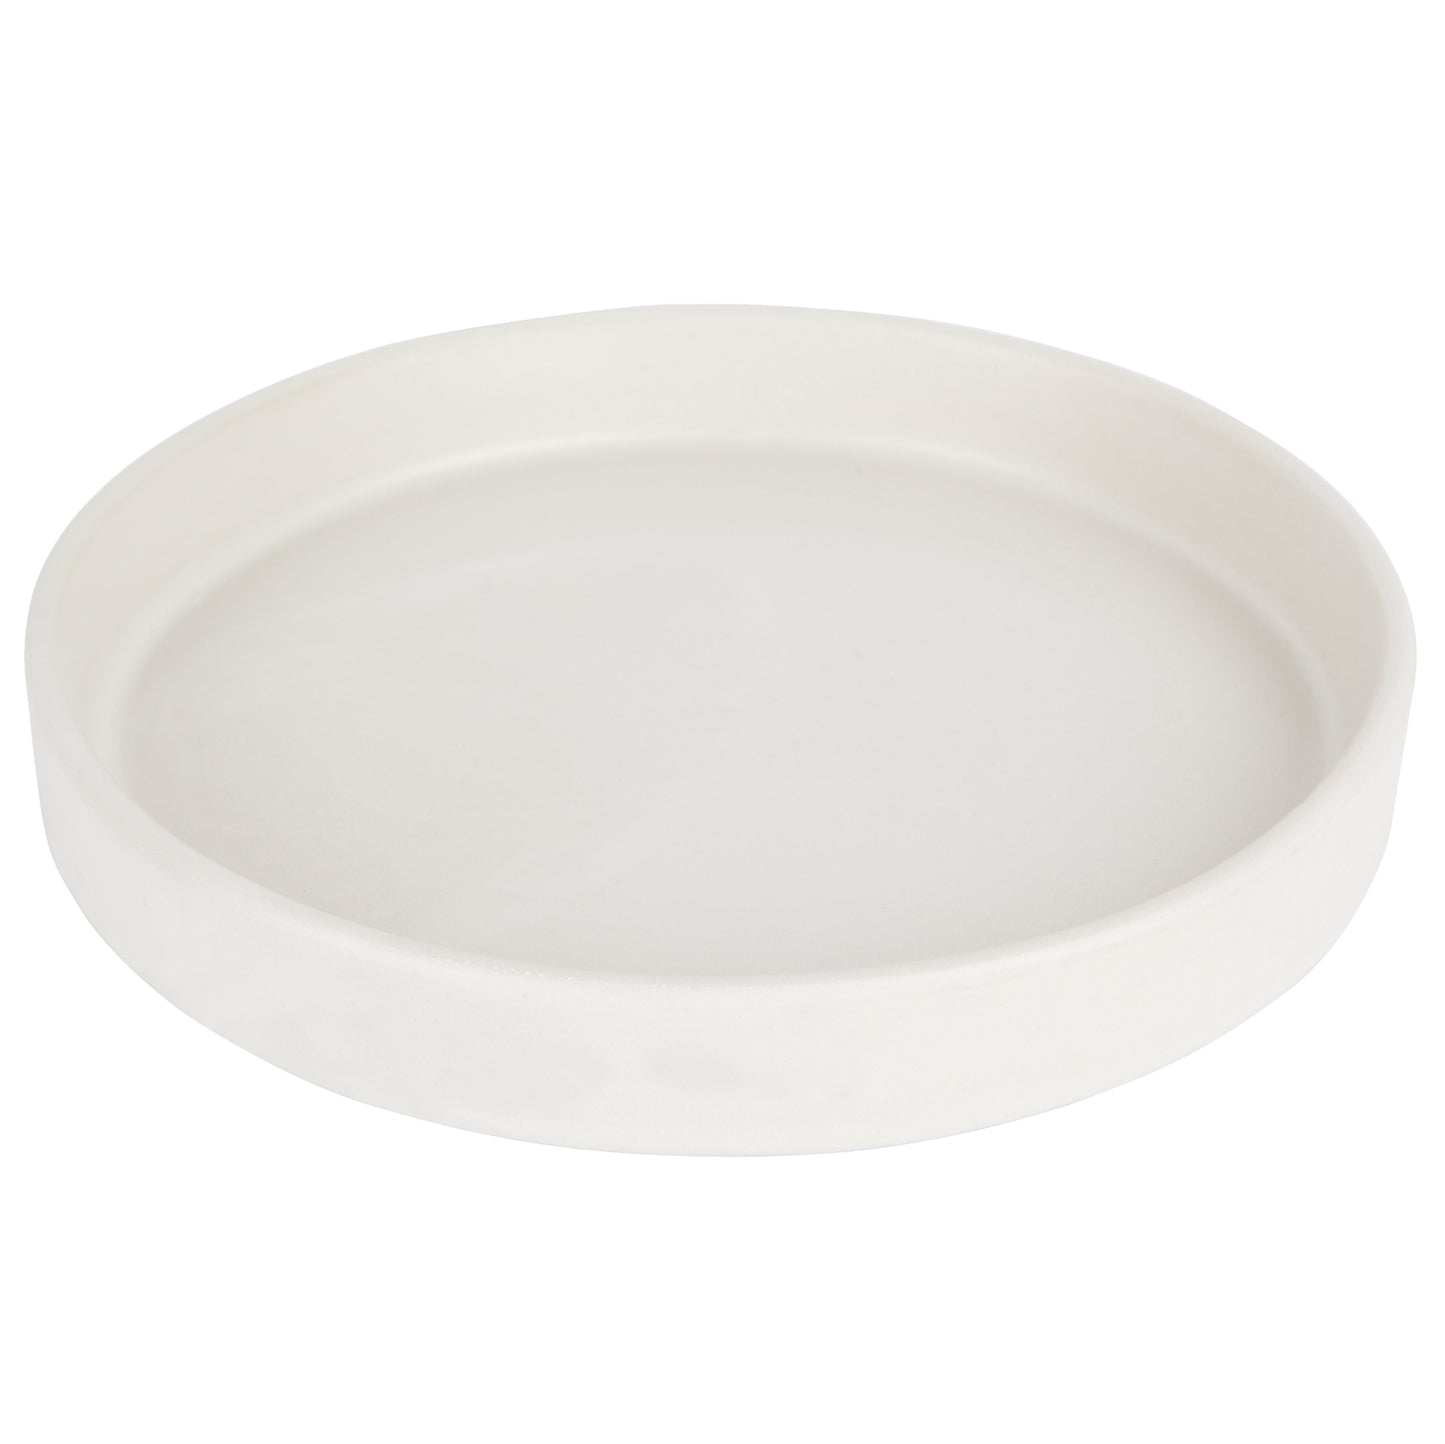 Tab Plate - Medium White